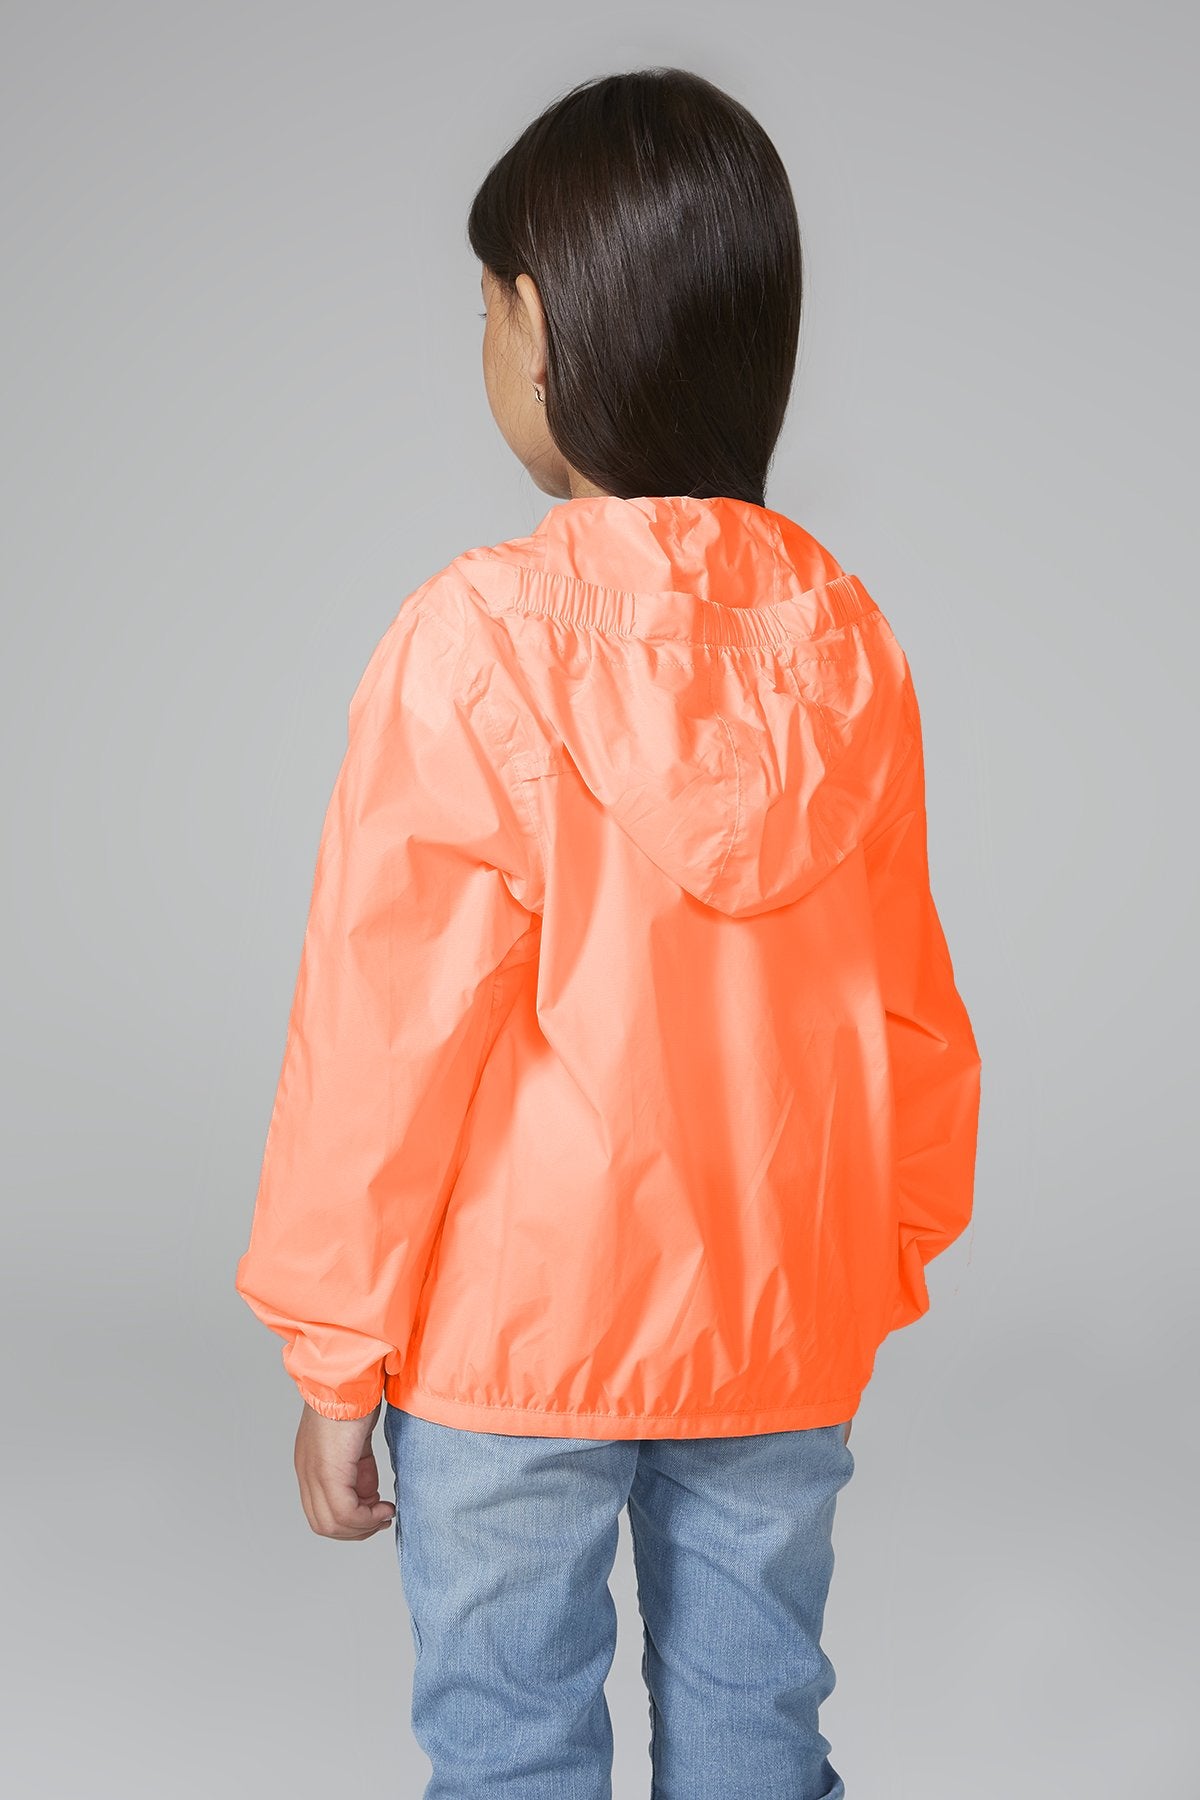 Kids orange fluo full zip packable rain jacket and windbreaker